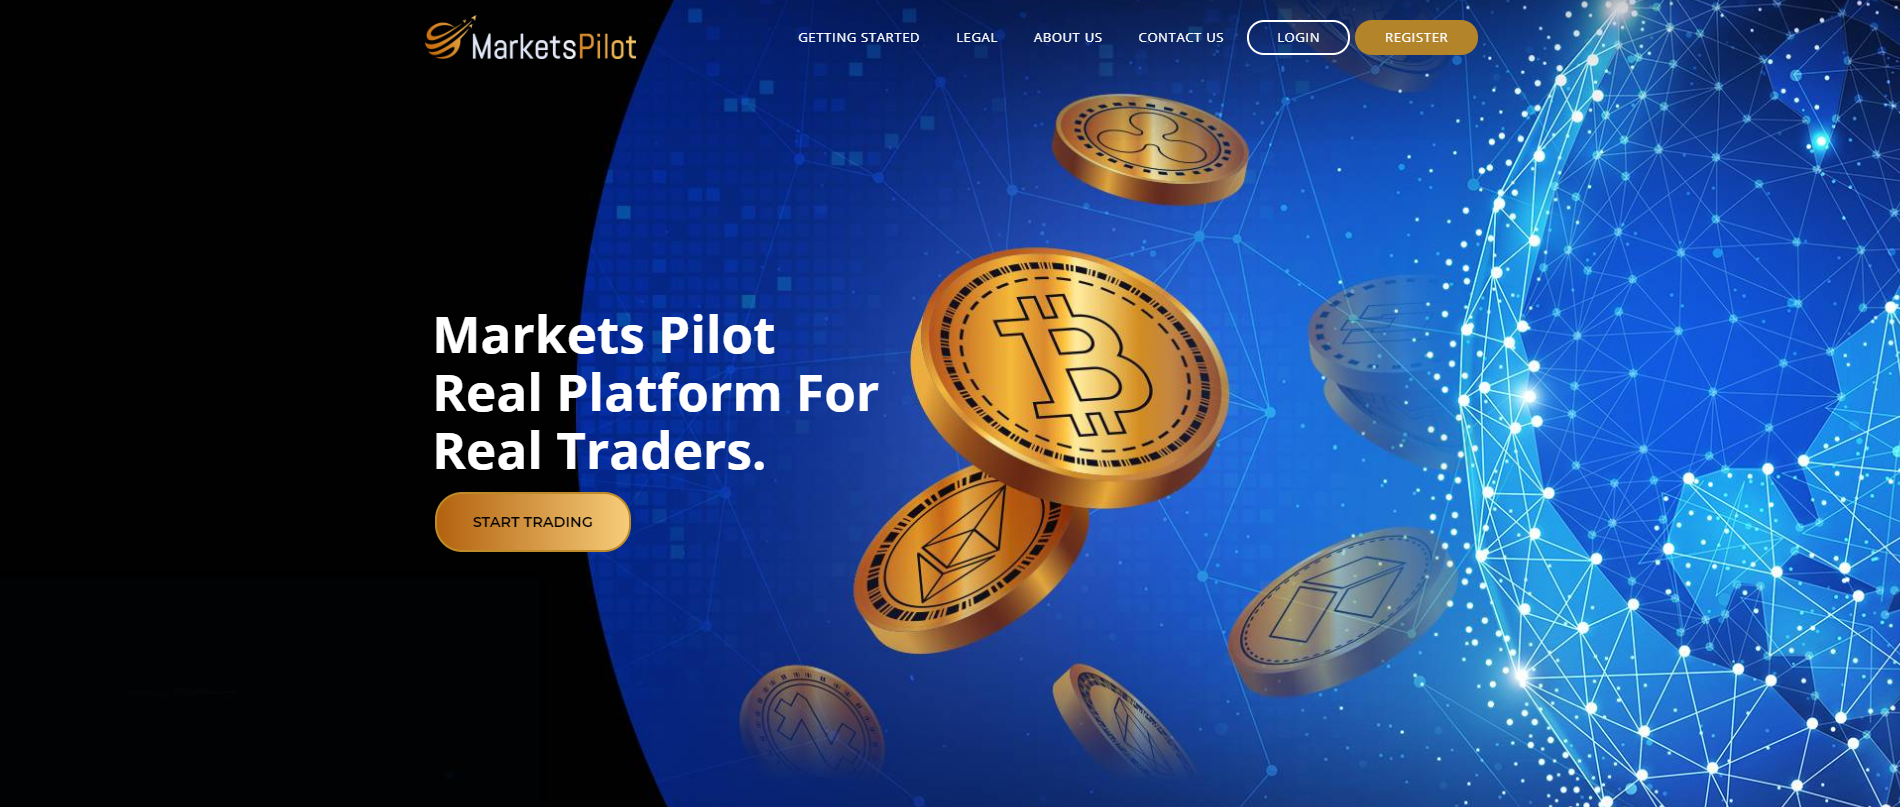 Markets Pilot trading